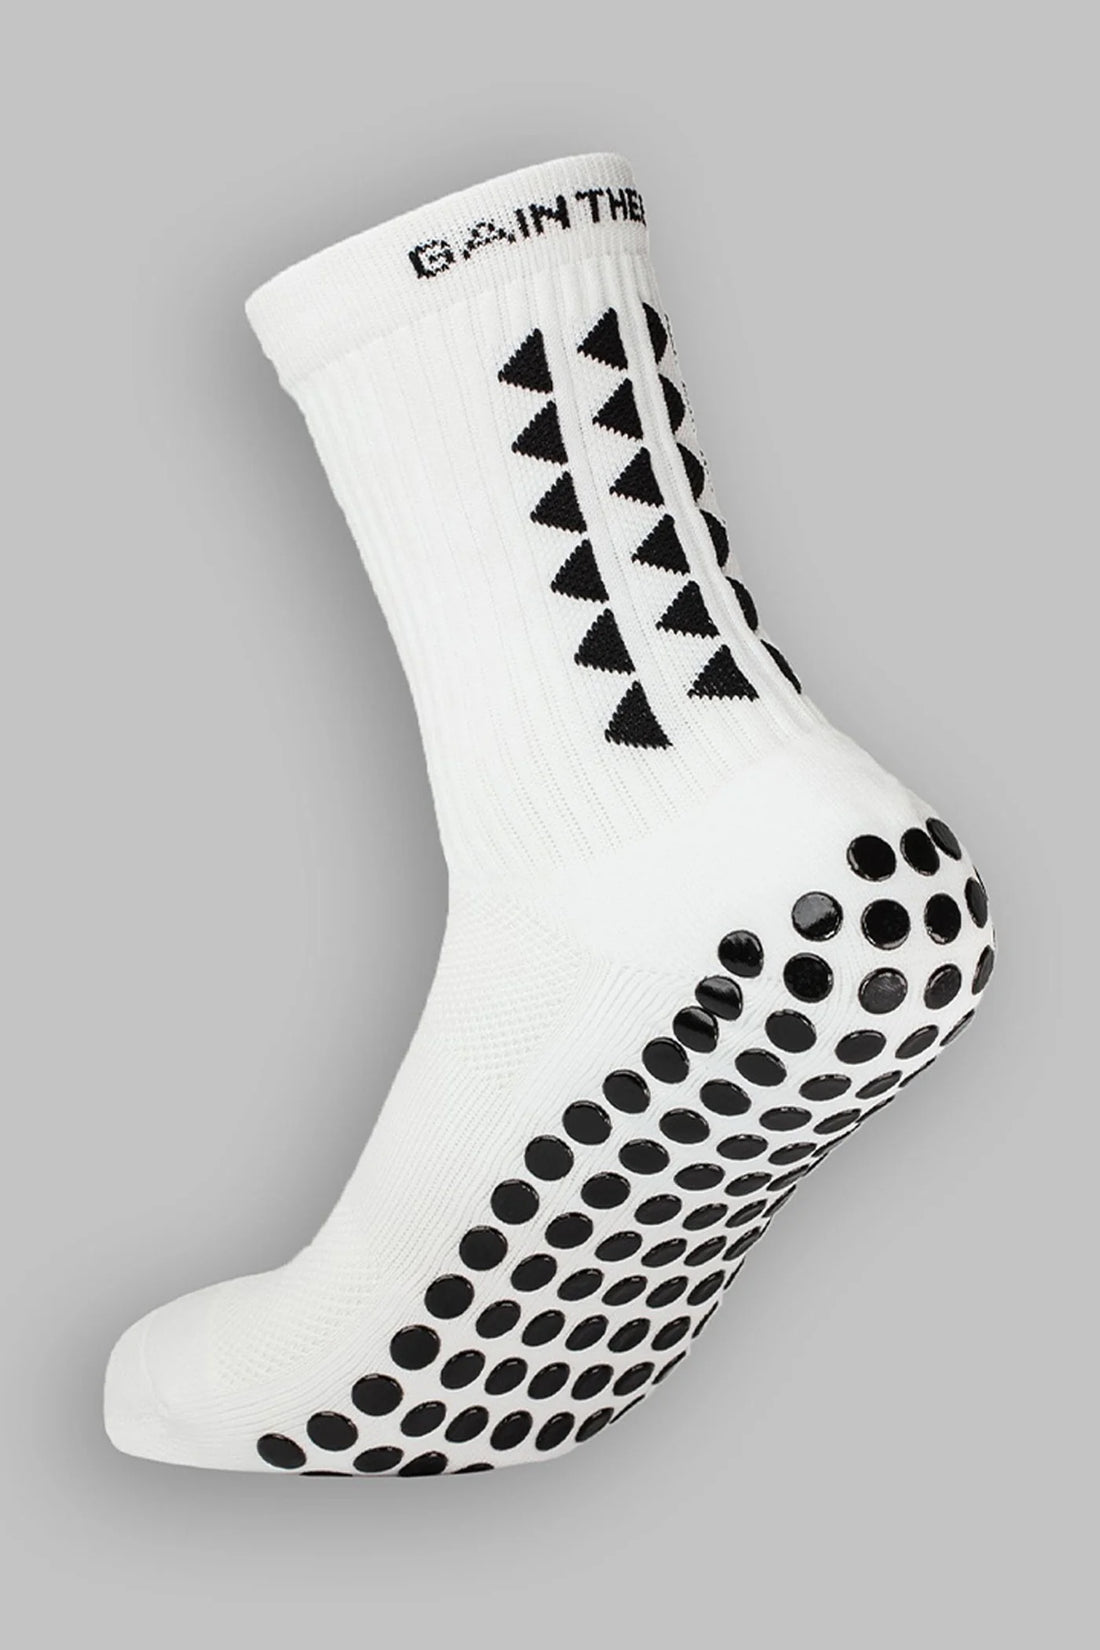 A pair of grip socks showcasing their non-slip soles, highlighting the effectiveness of grip socks.